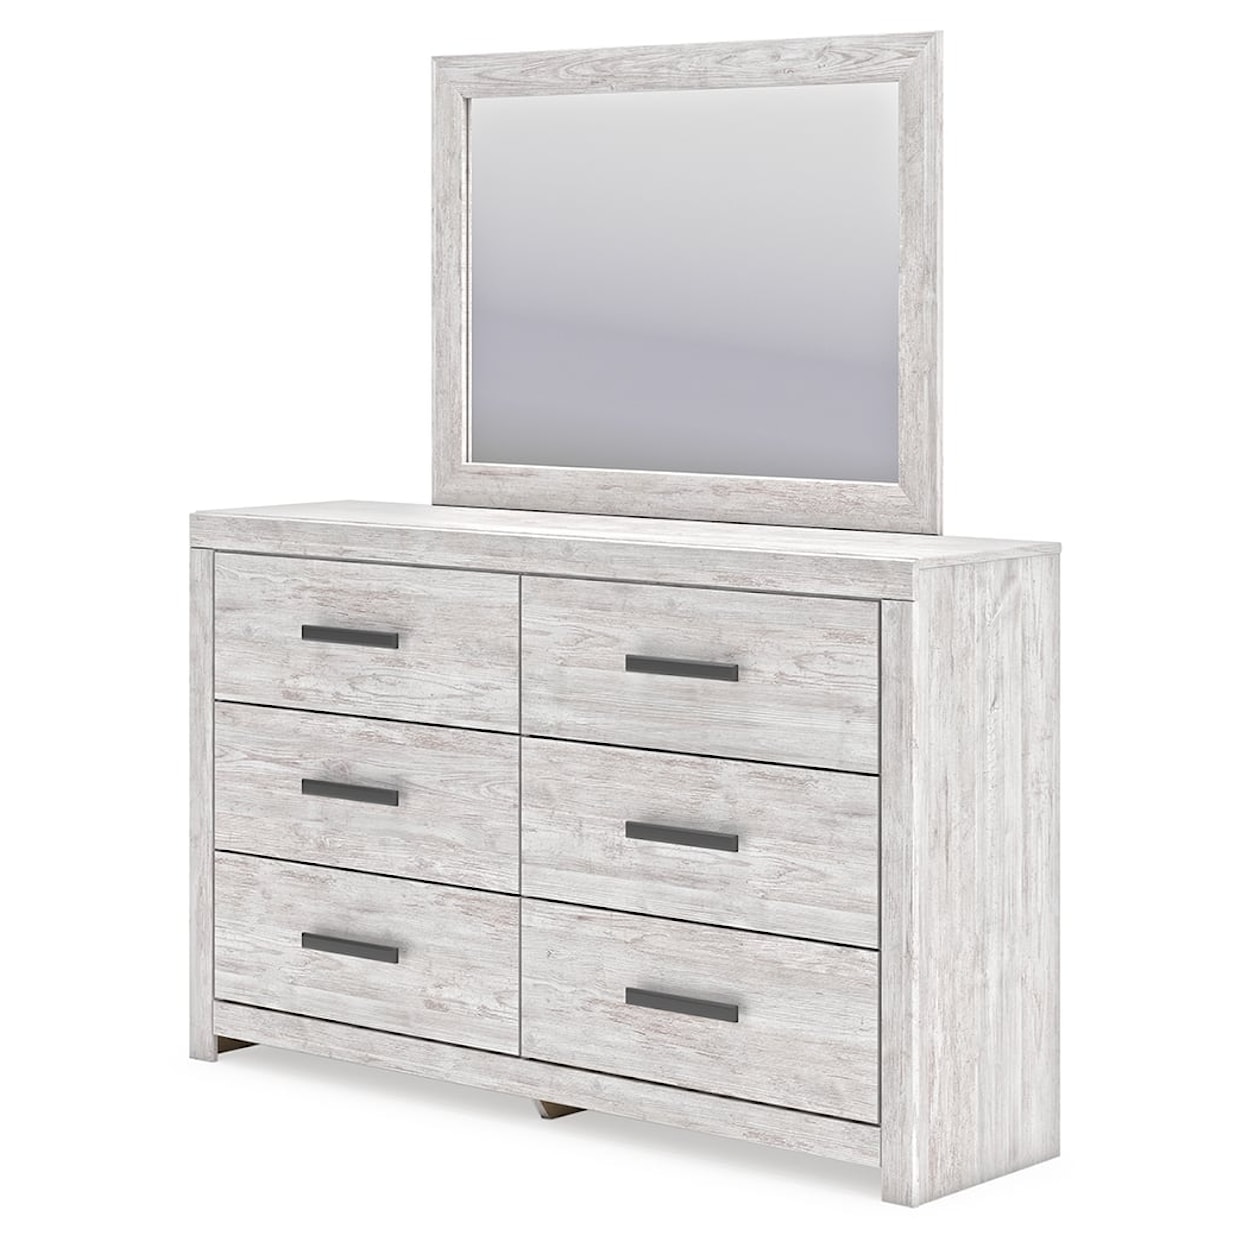 Ashley Furniture Signature Design Cayboni Dresser and Mirror